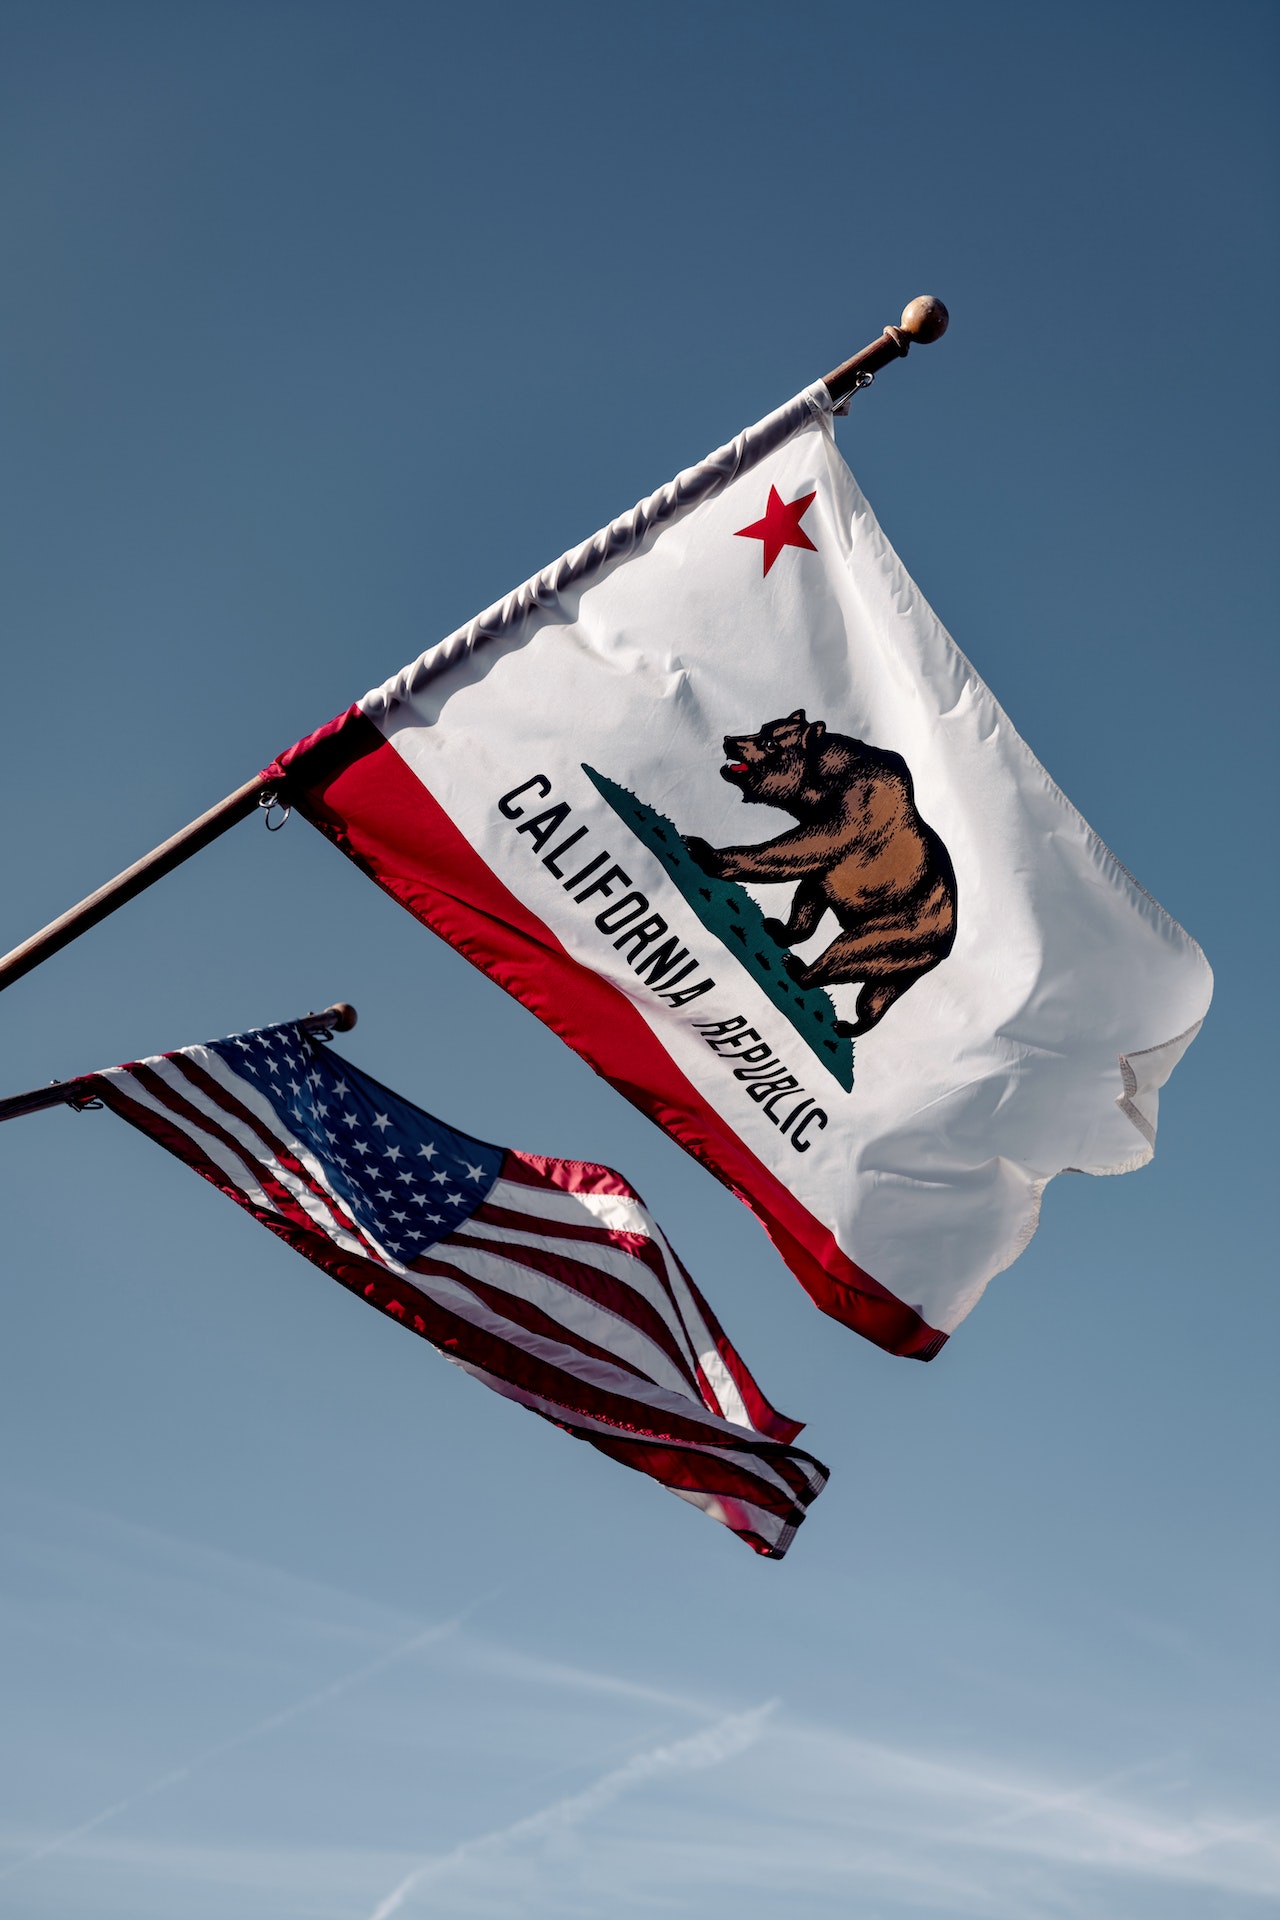 CA flag